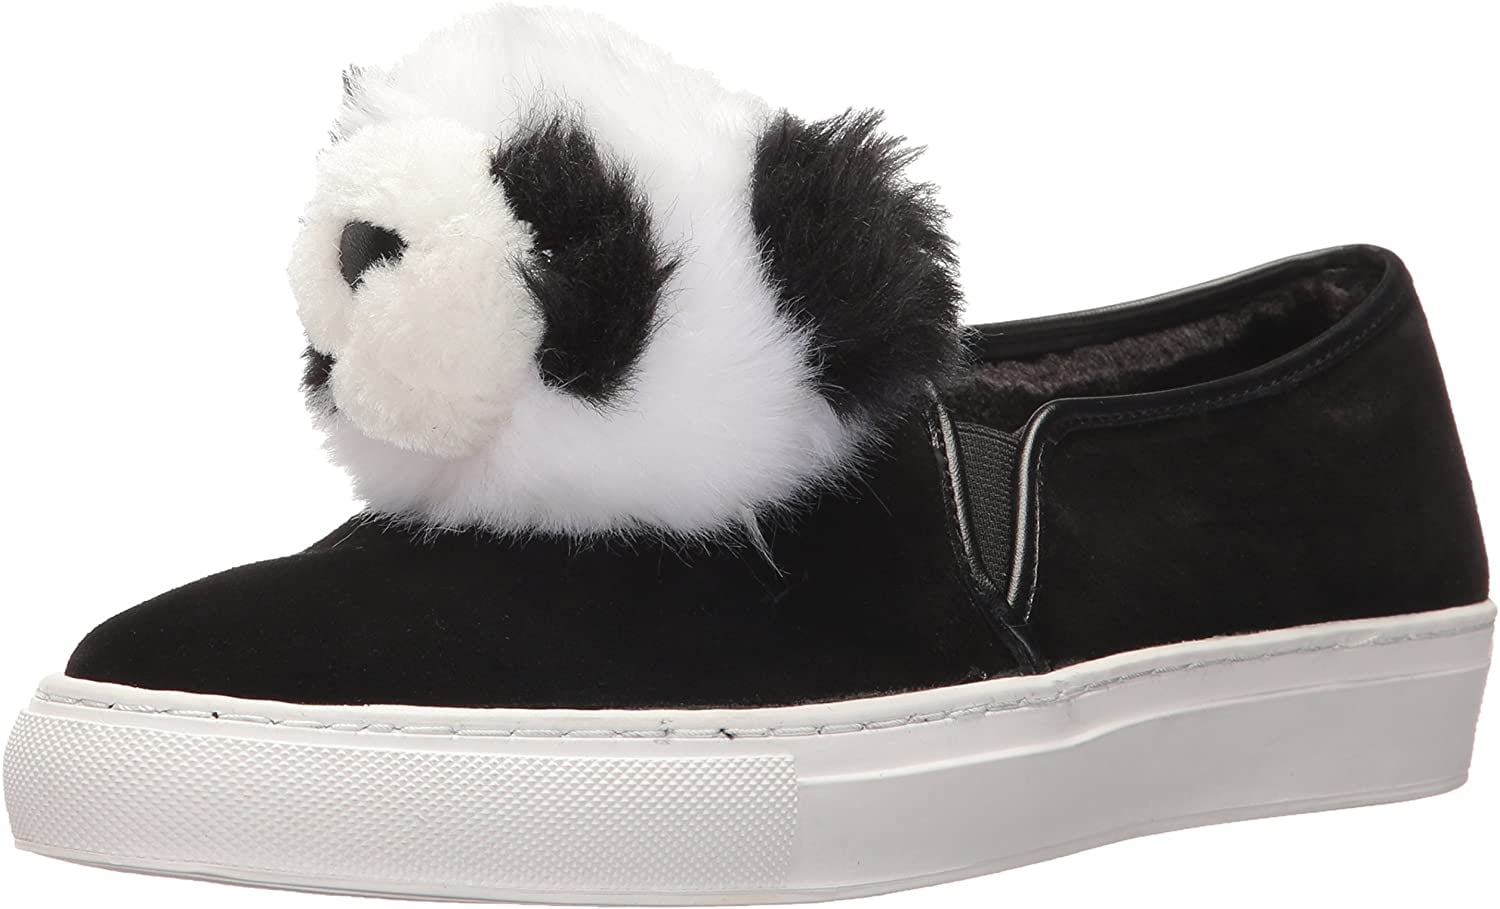 katy perry panda shoes